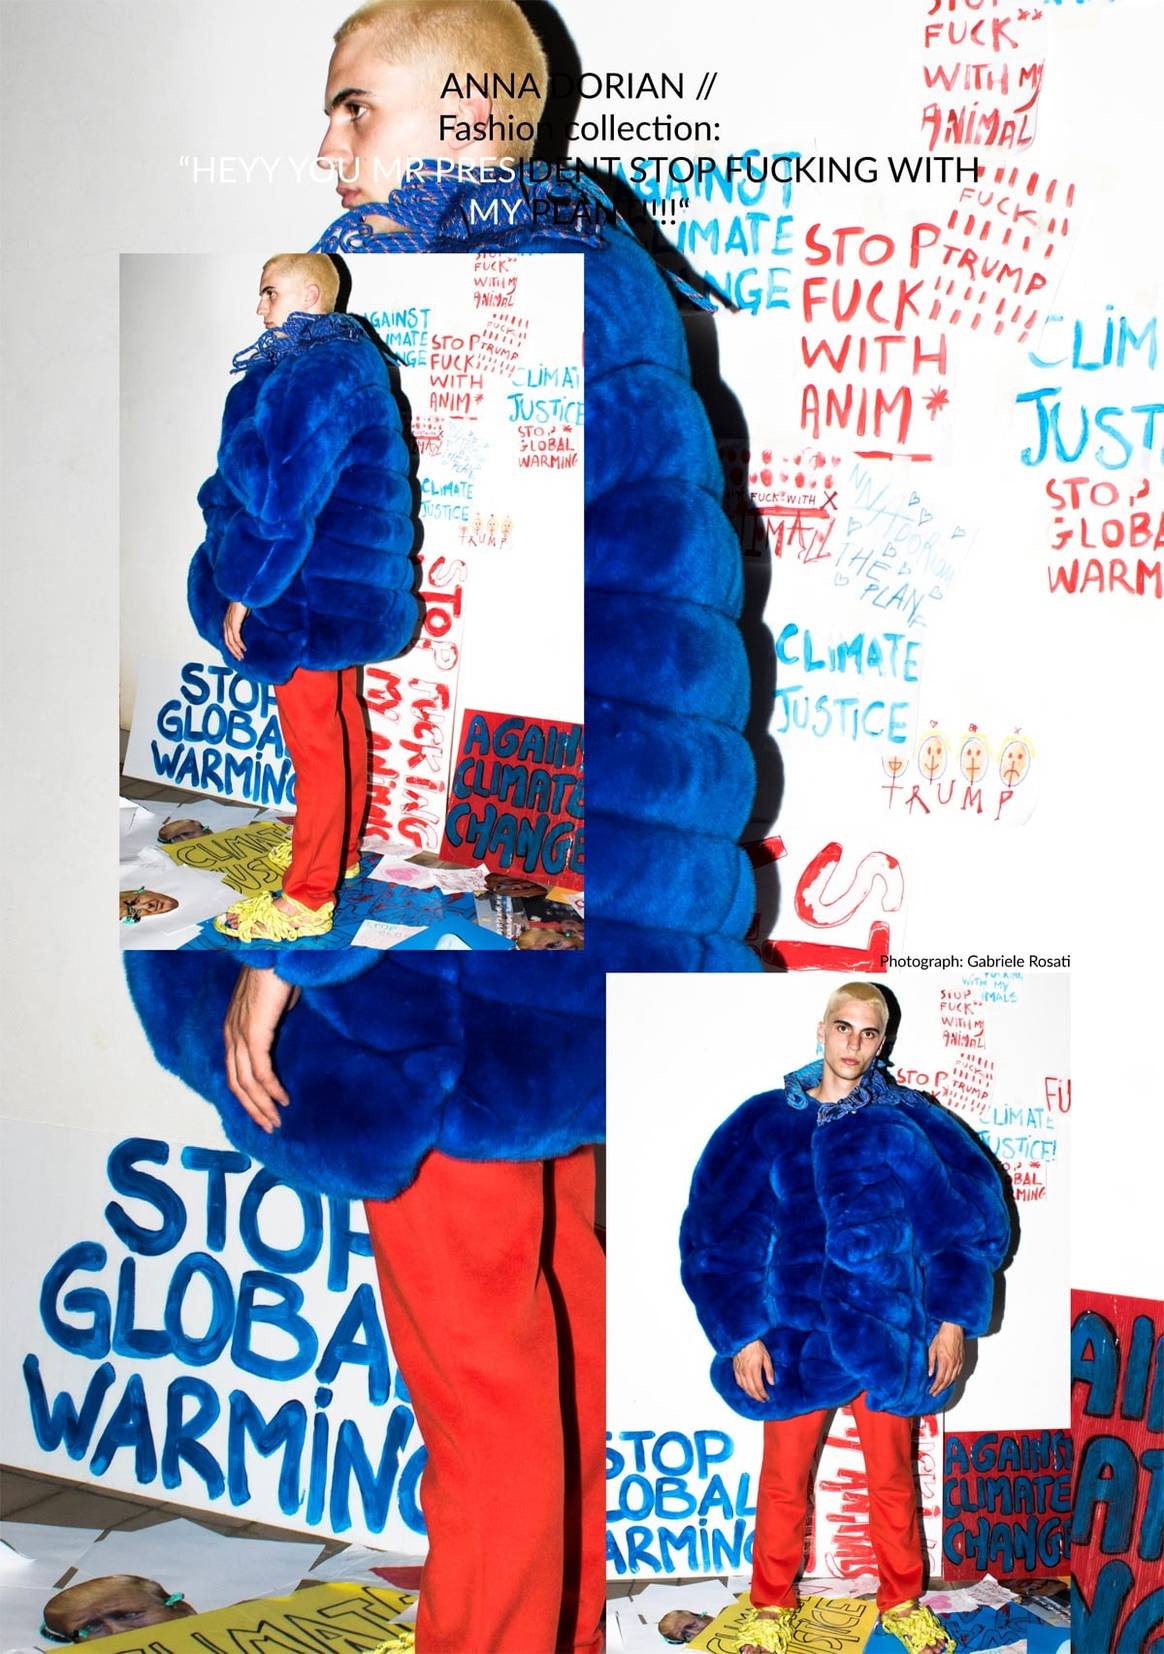 Trend Agency Move lanceert hun eerste trendboek: ‘Fashion Movement – The Sustainable System Unmasked’